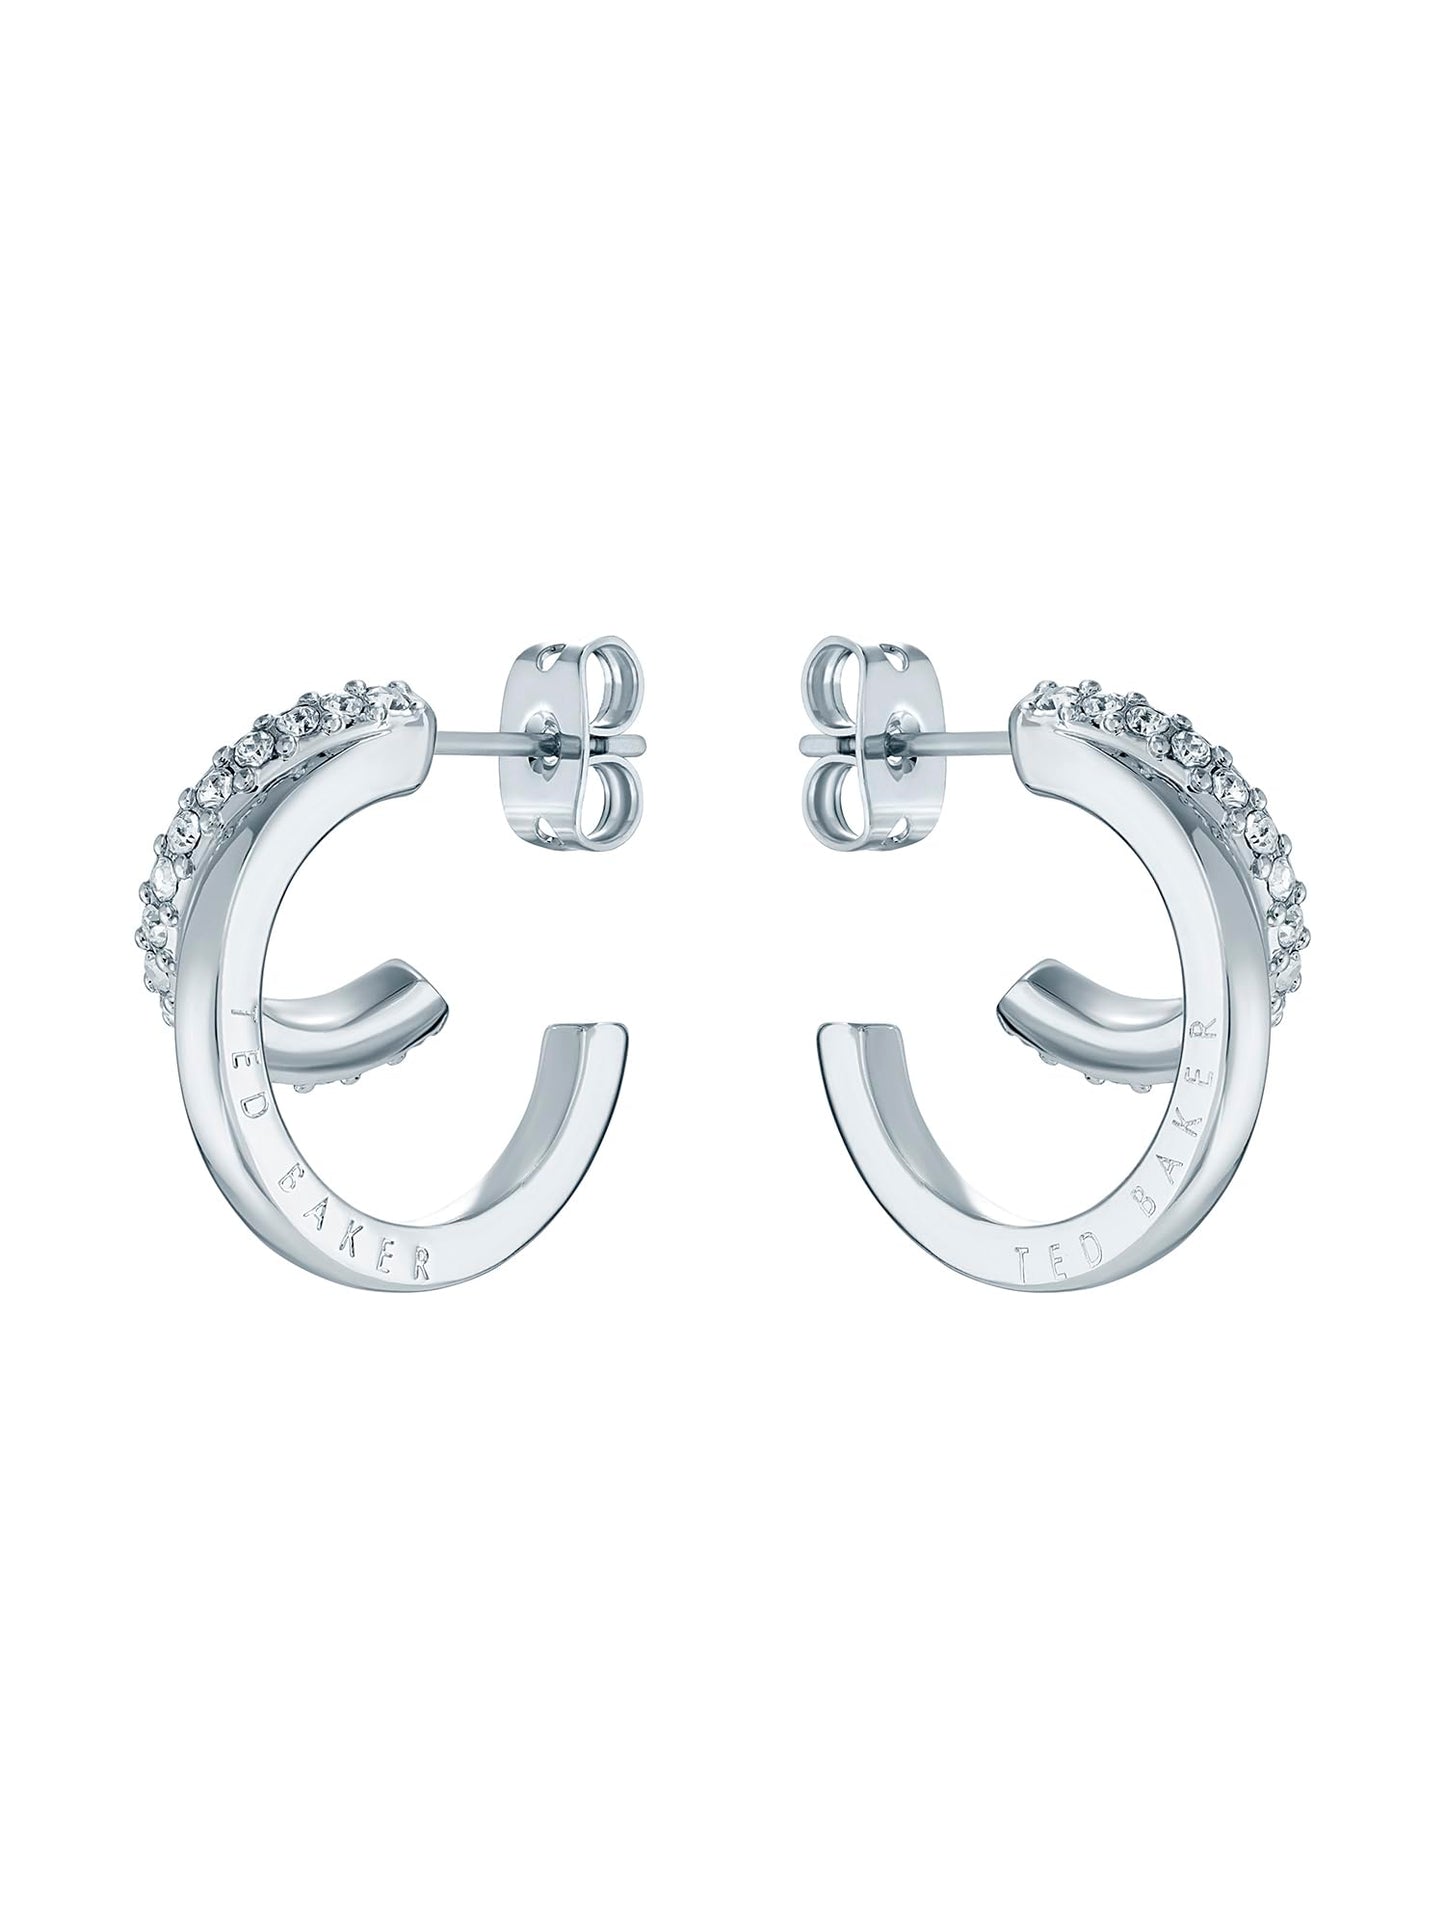 Ted Baker Helias Double Hoop Crystal Earrings For Women (Silver/Crystal)